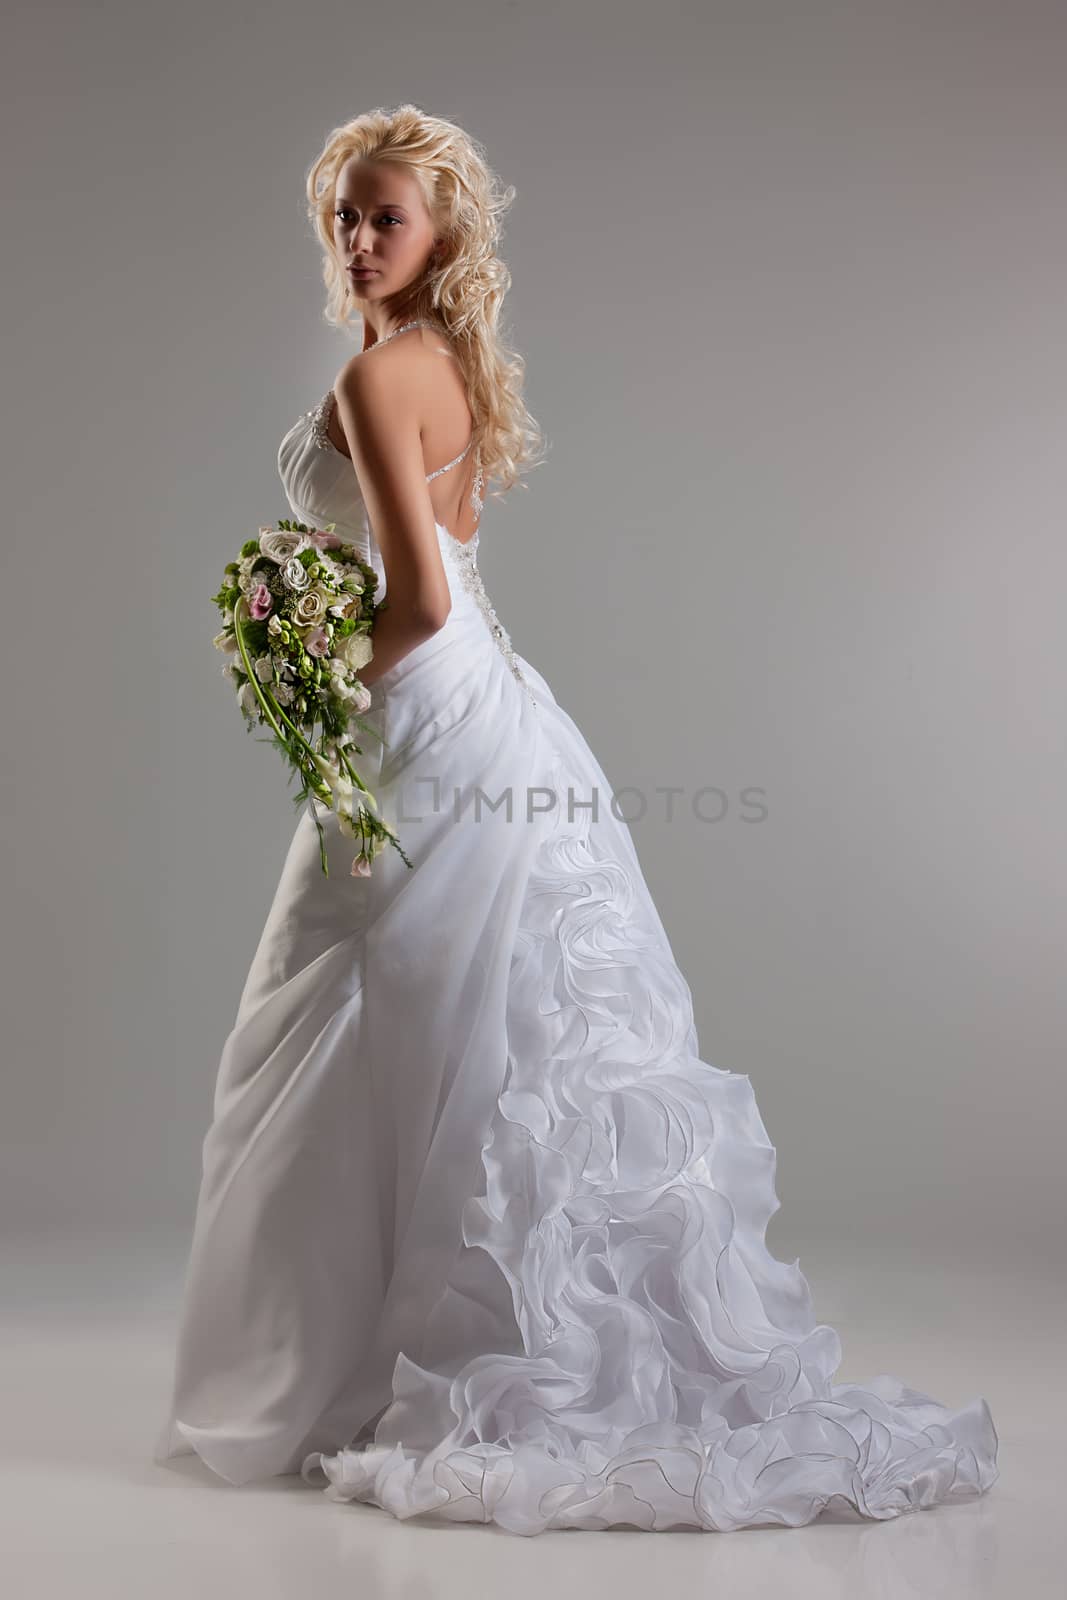 Young beautiful blonde woman in a fashionable wedding dress